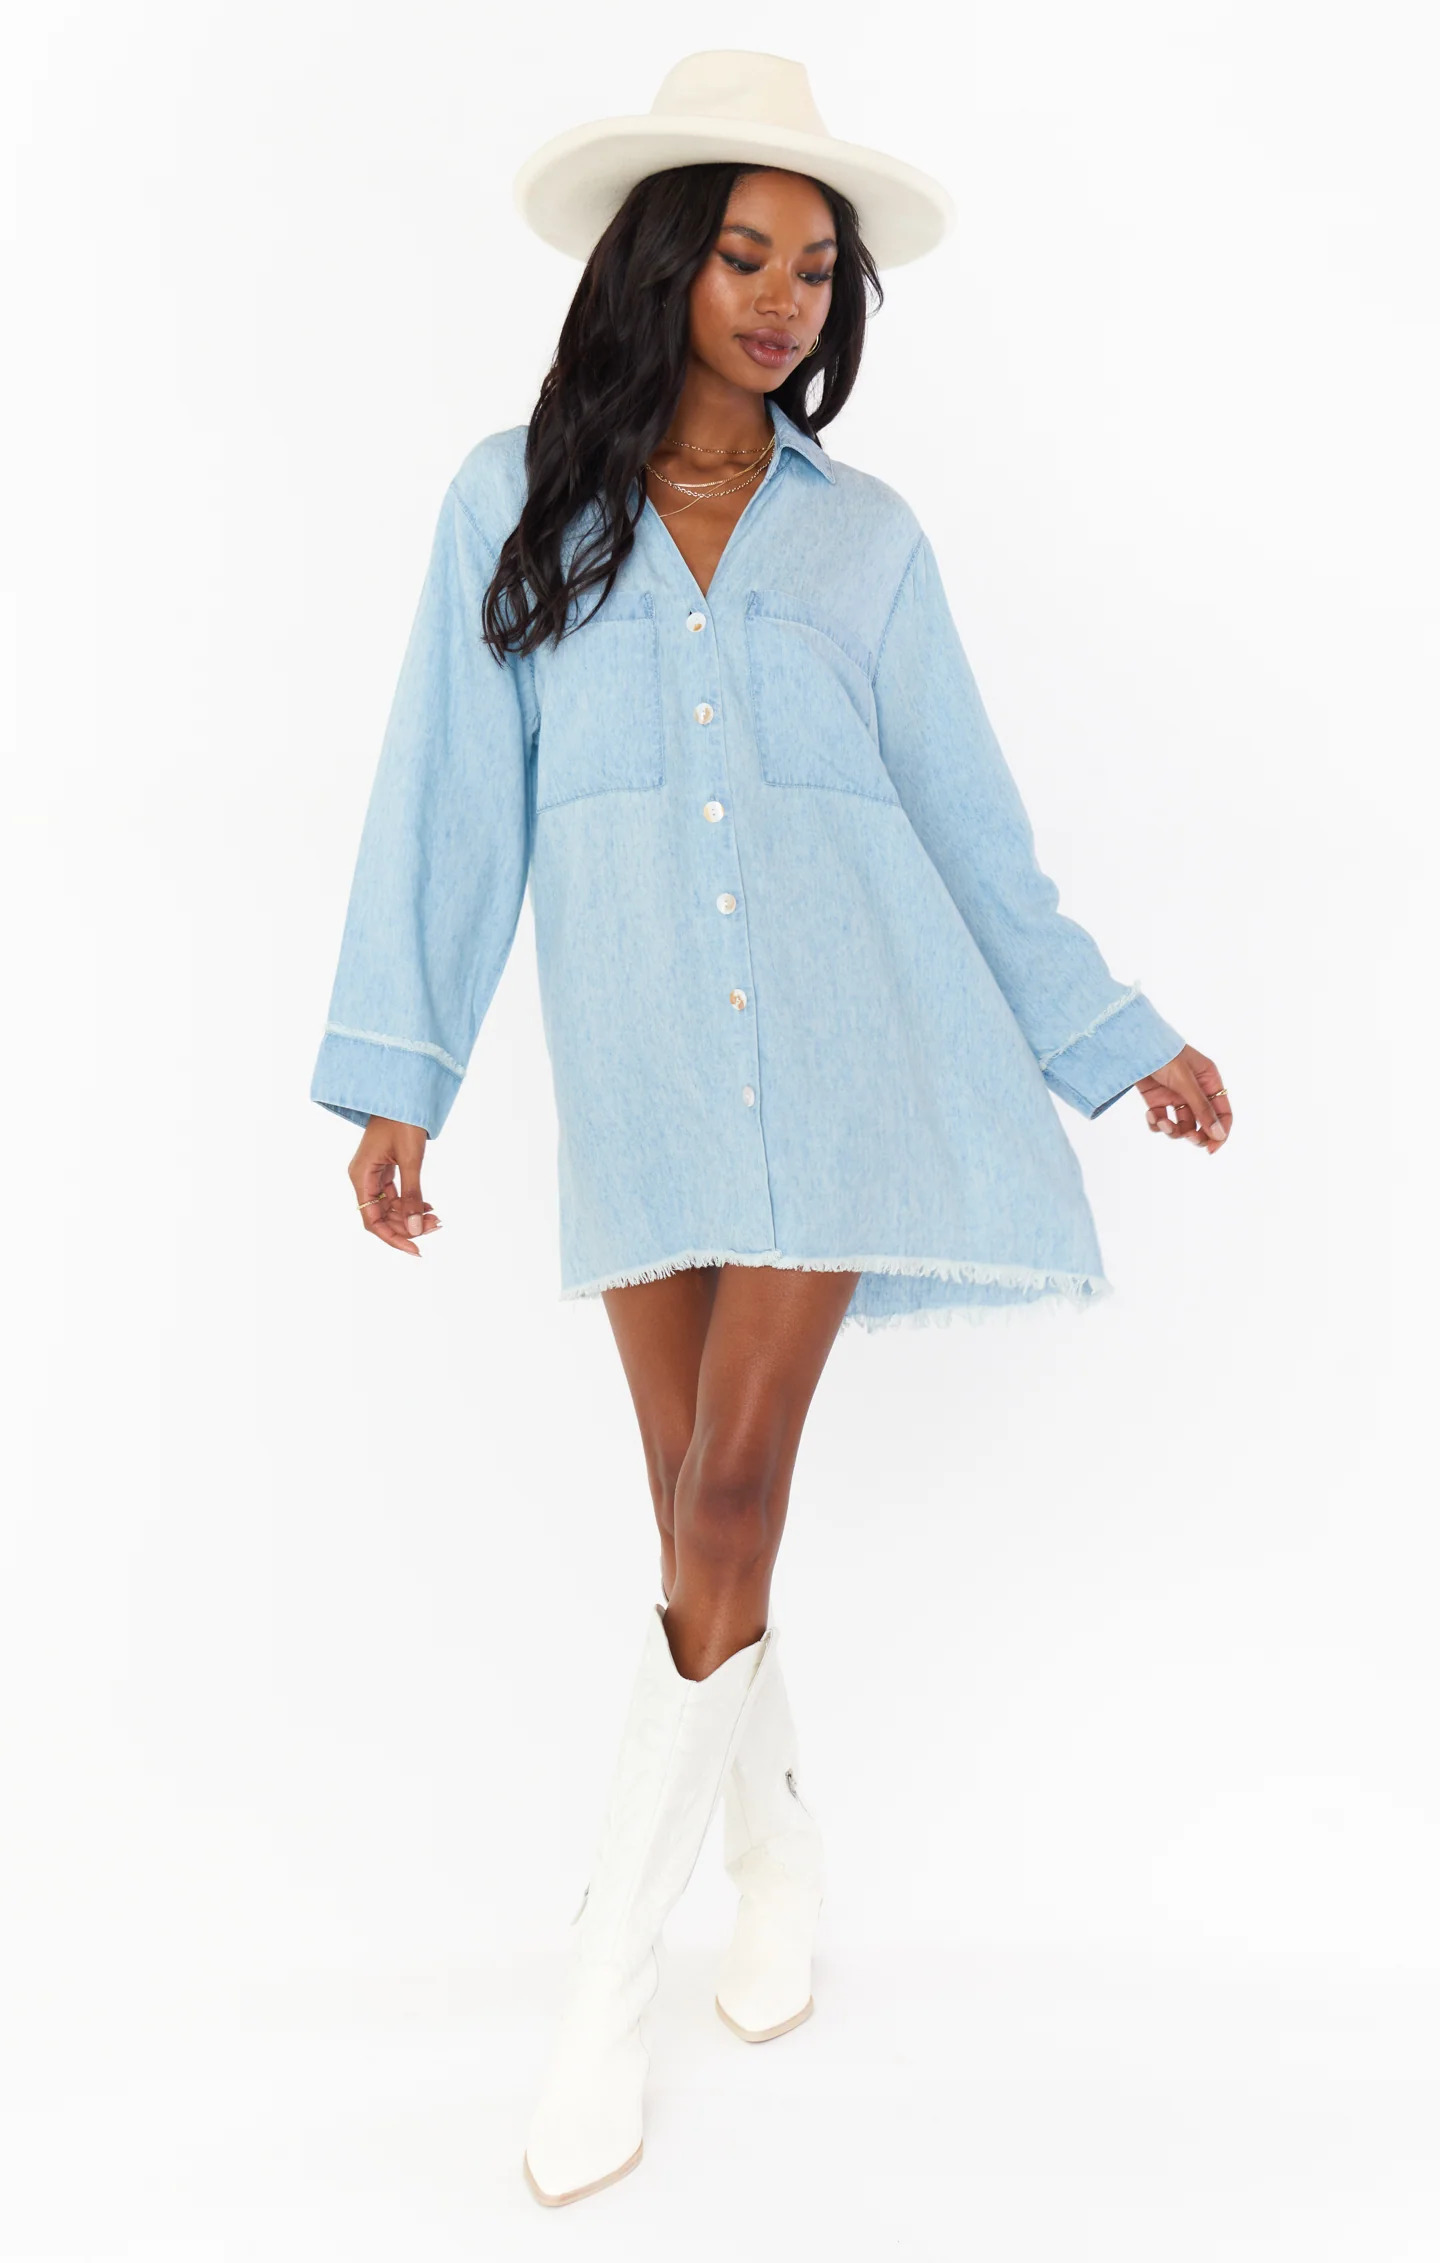 Nashville Outfit Ideas For Summer: Oversized Shirt Dress 